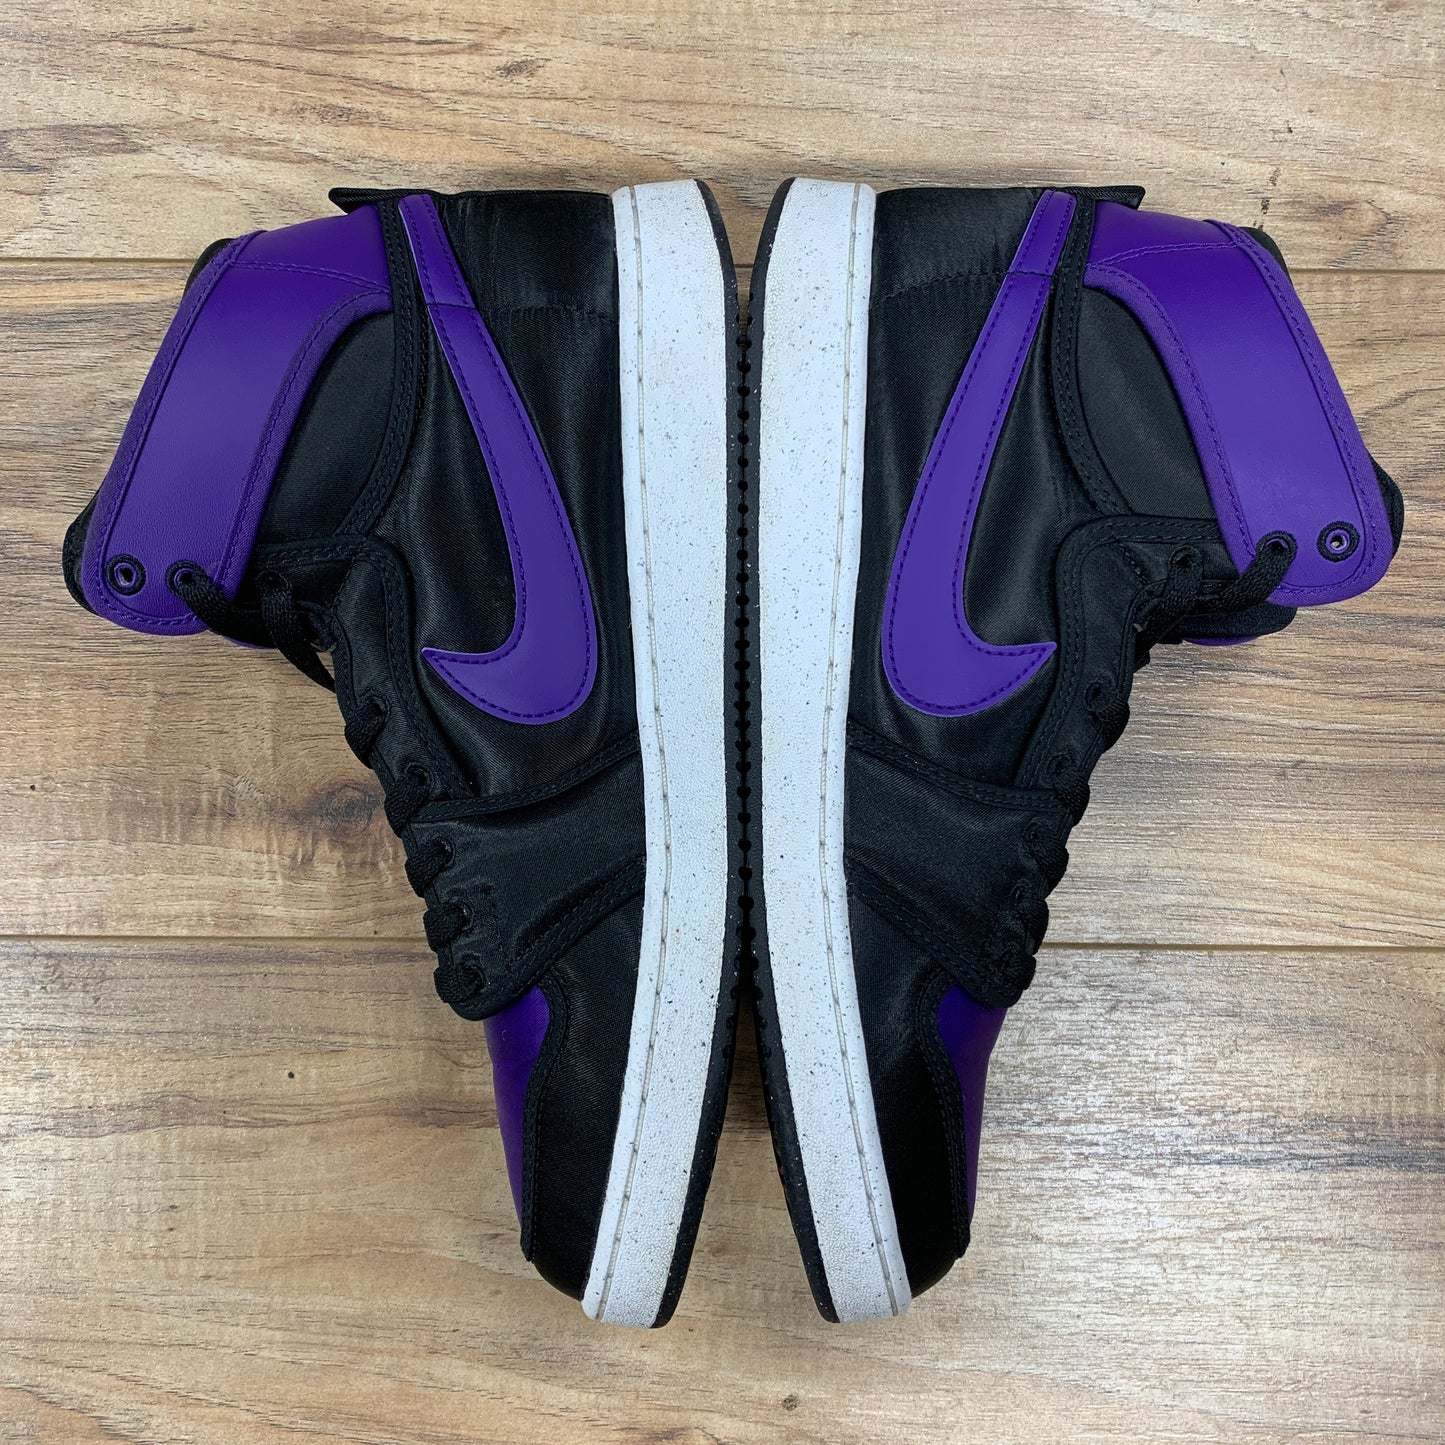 Jordan 1 AJKO 'Field Purple Satin' Size 8.5